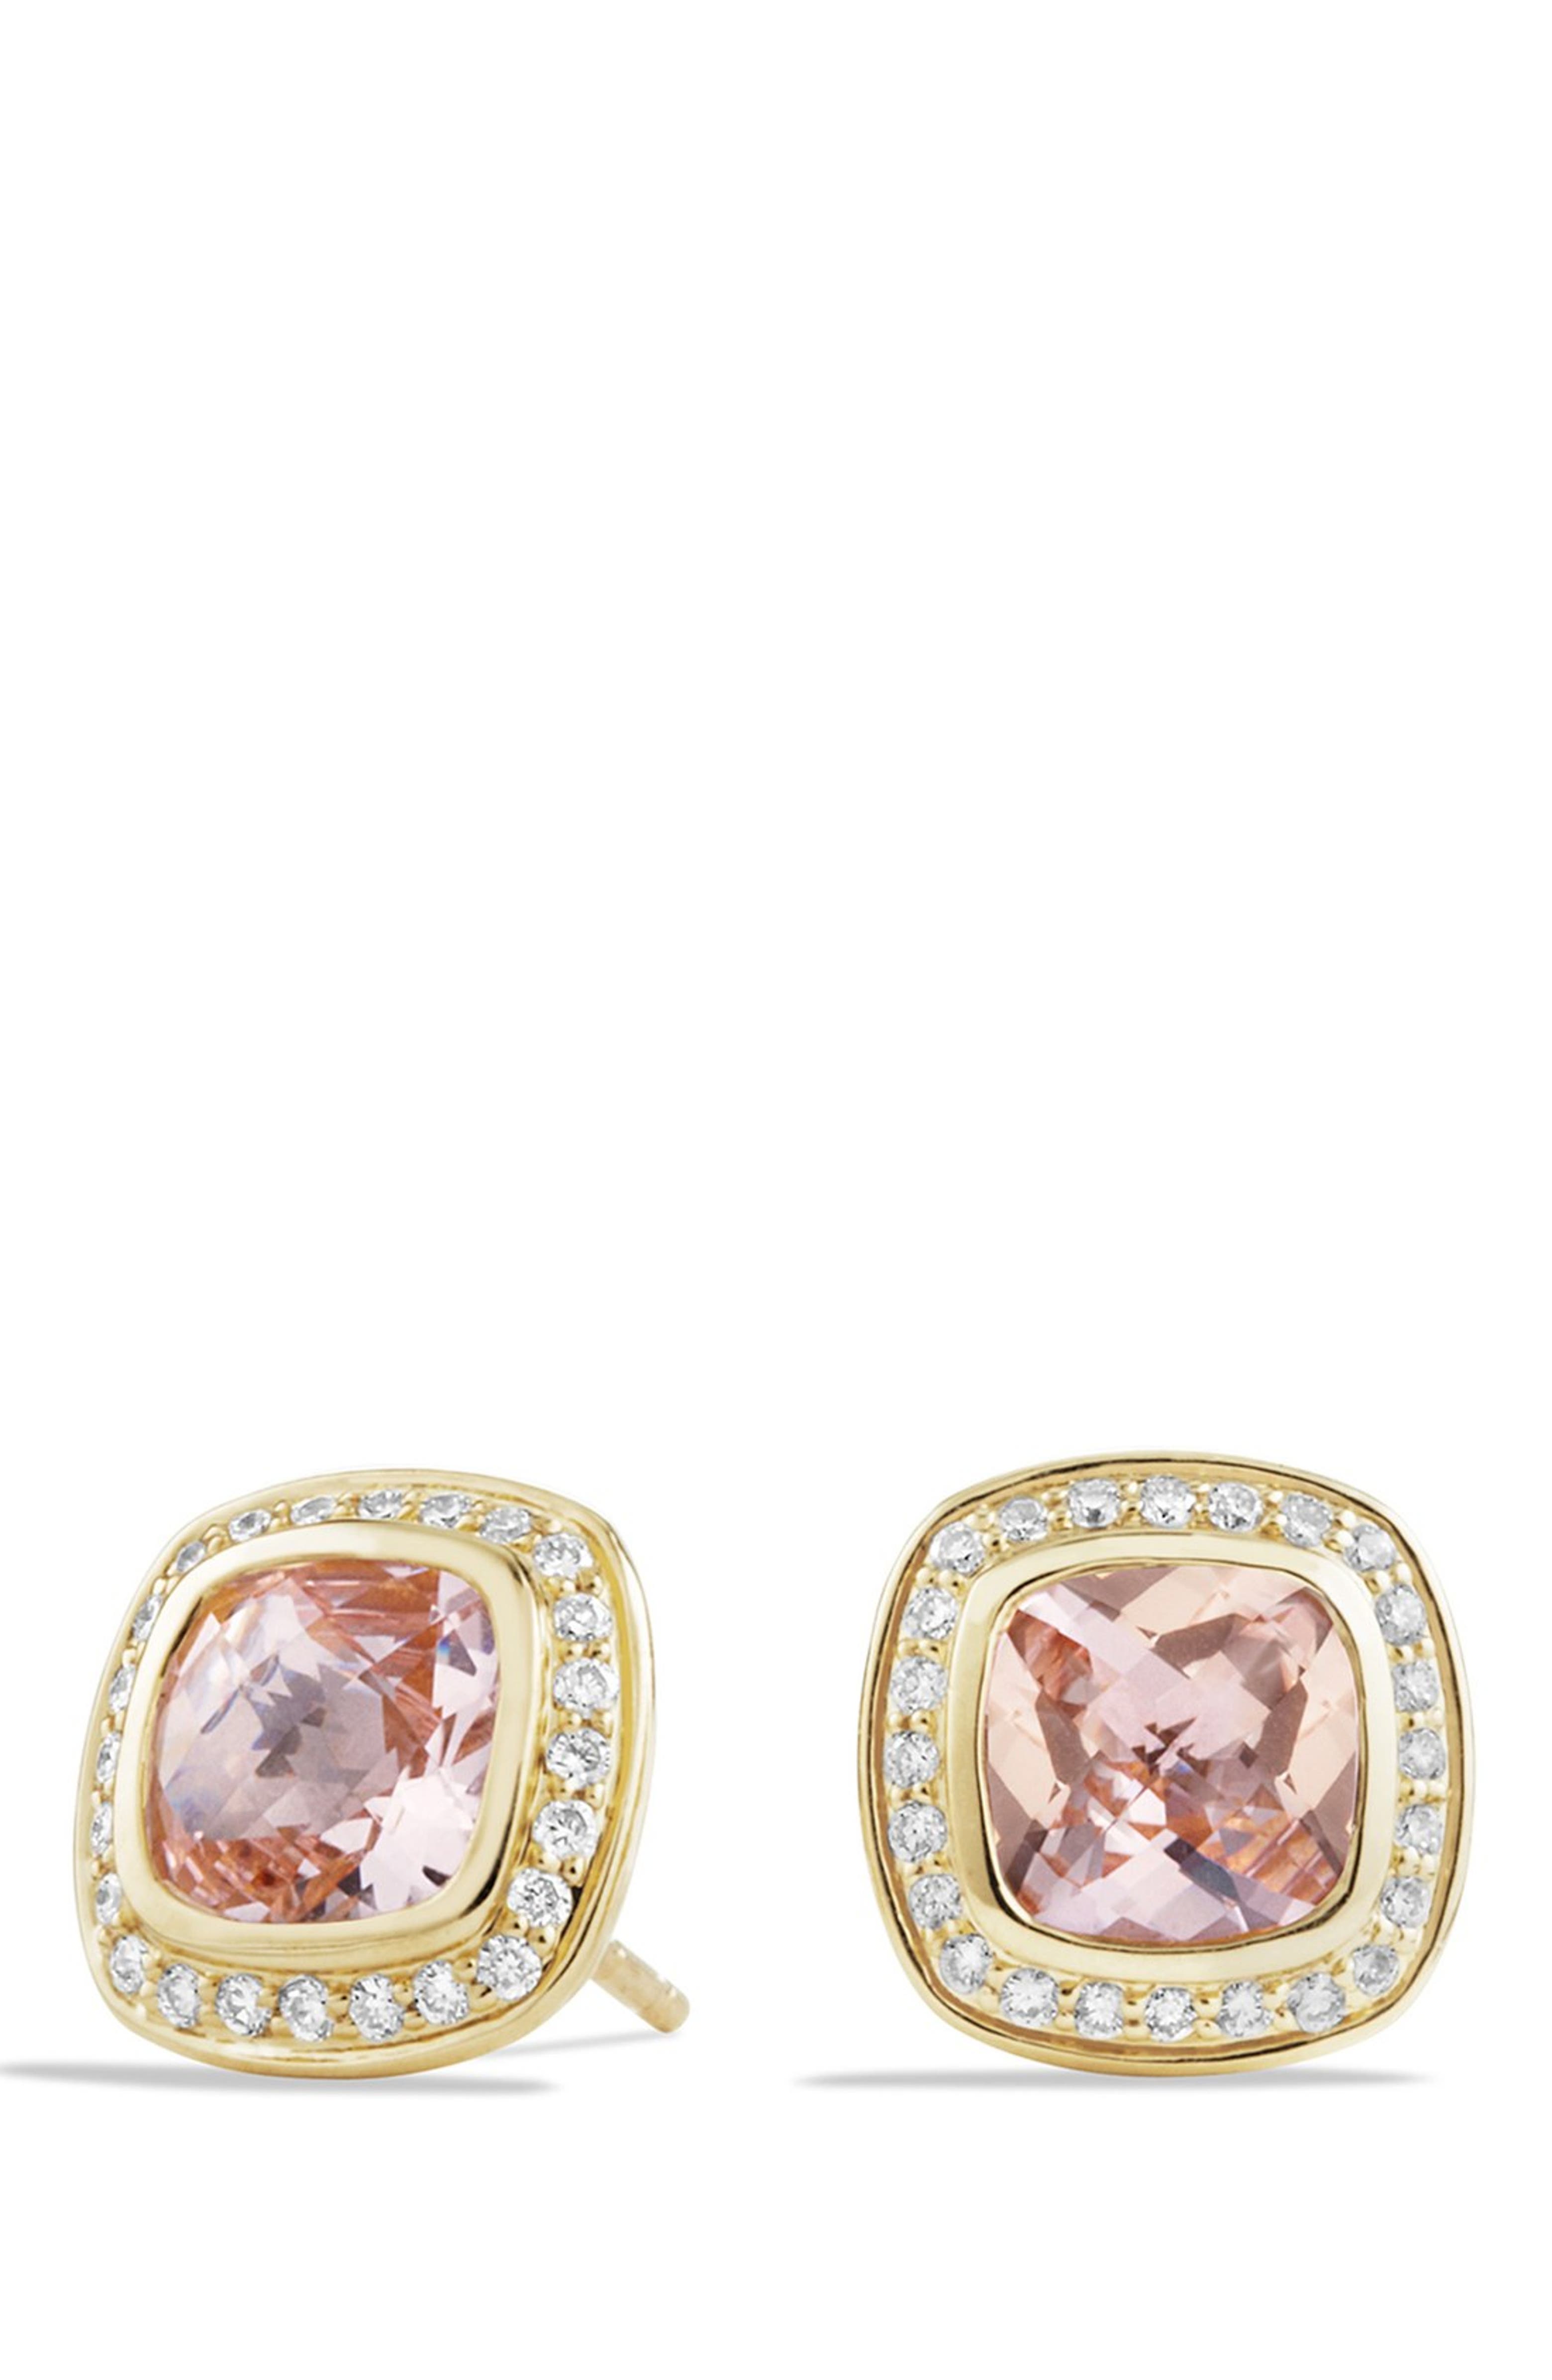 David Yurman 'Albion' Earrings with Semiprecious Stone and Diamonds in ...